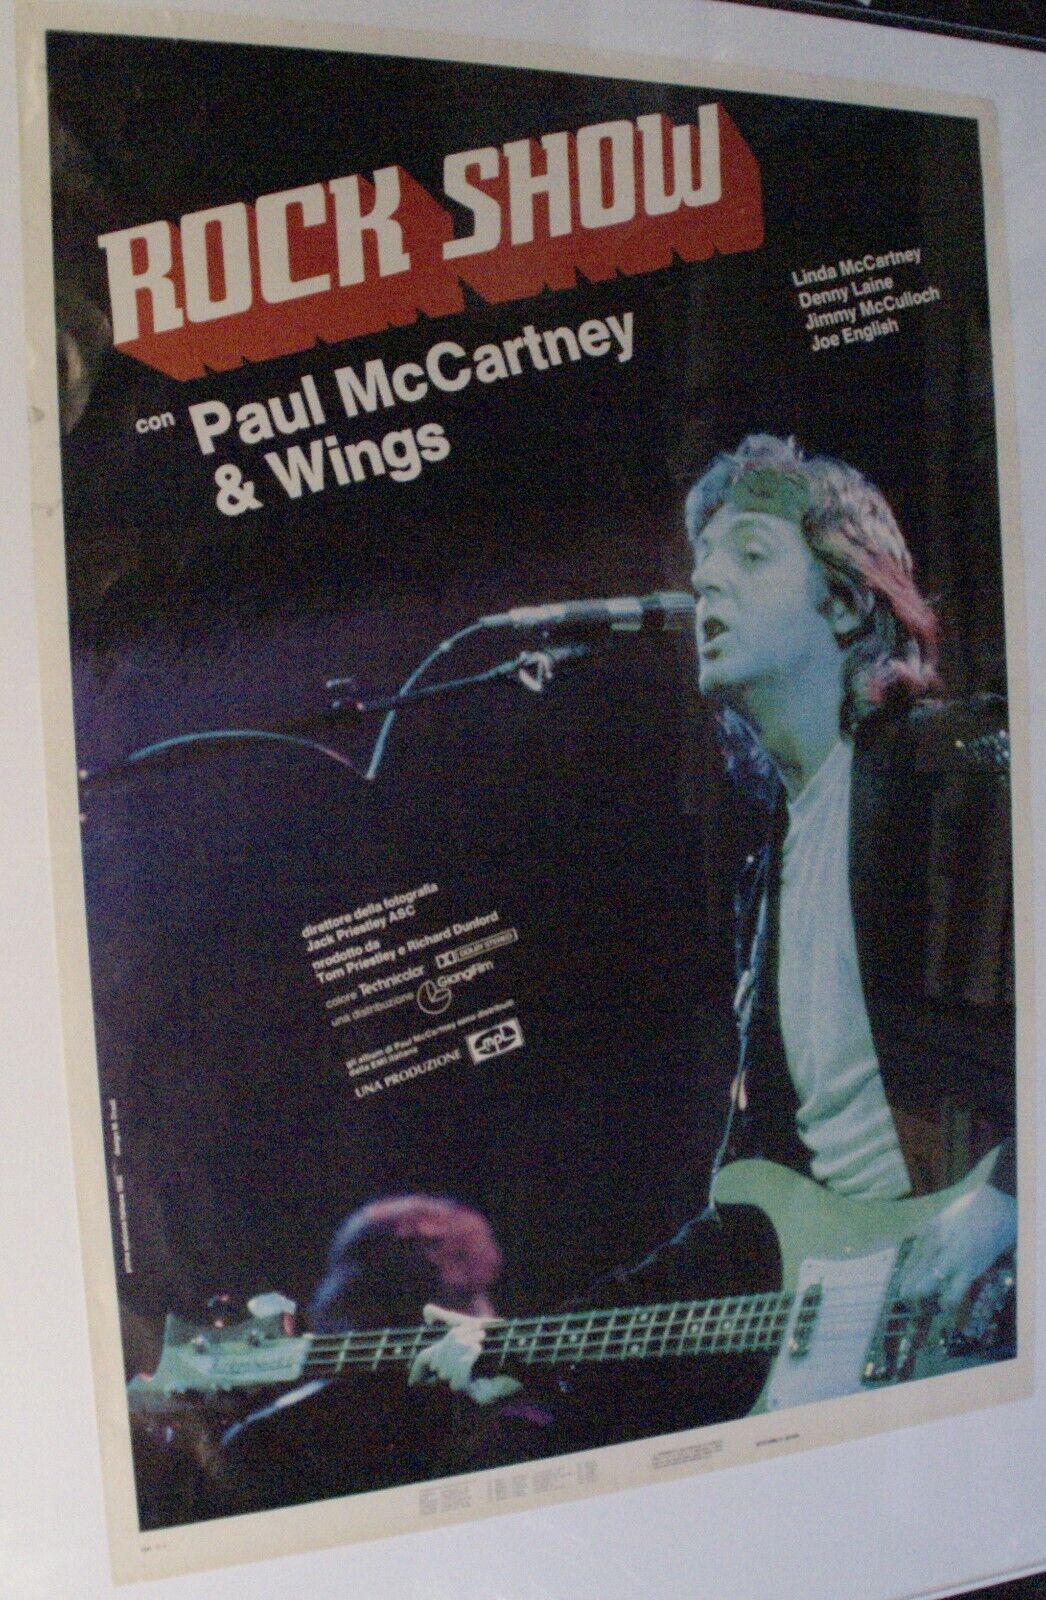 The Beatles Paul McCartney And Wings Poster Orig Vintage Italian Rock Show 1980